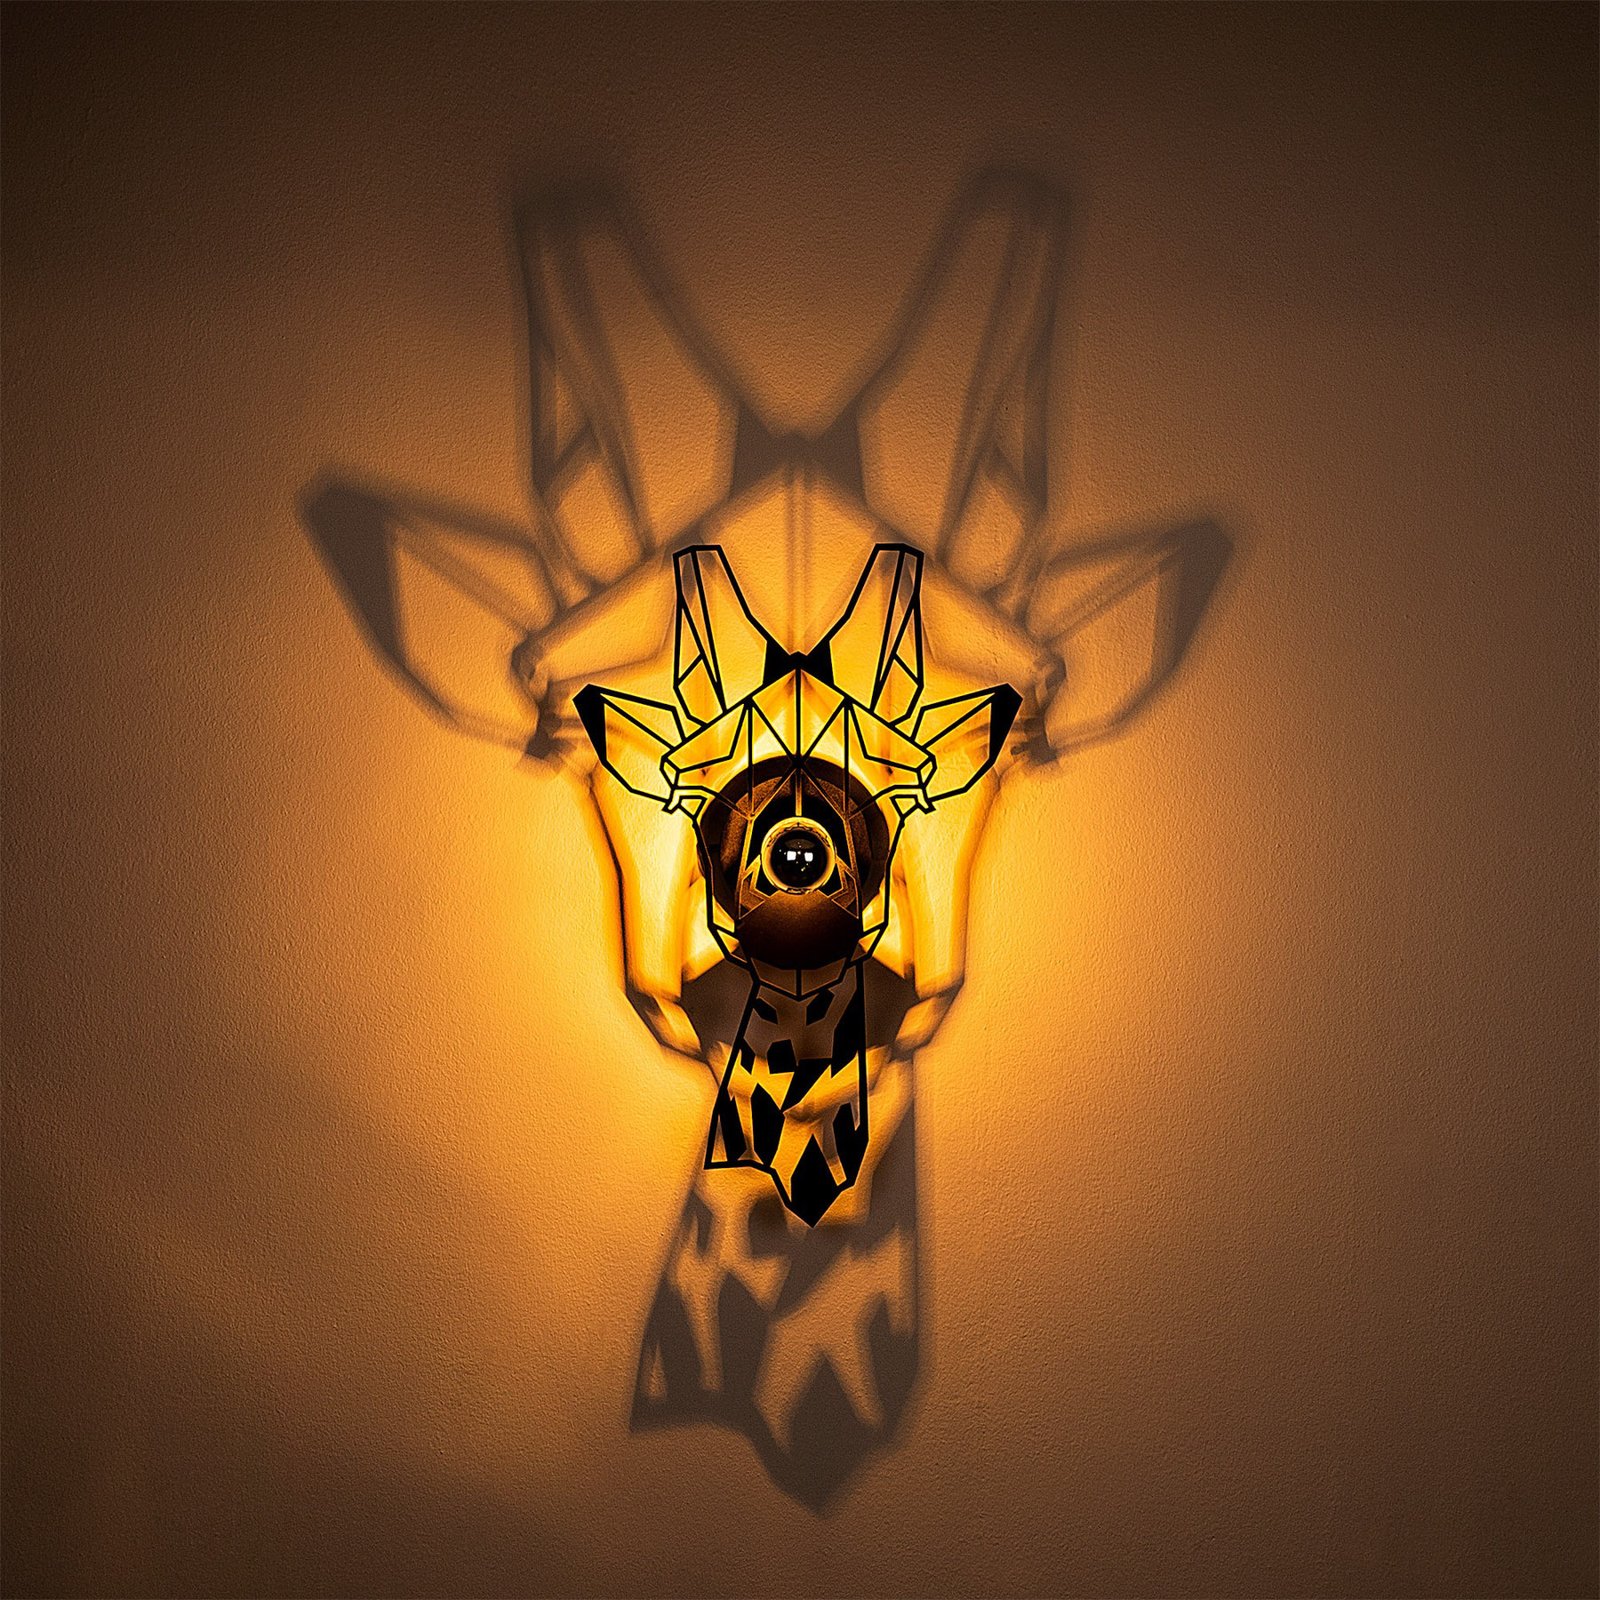 Wandlamp W-029, lasercut, giraffendesign, zwart